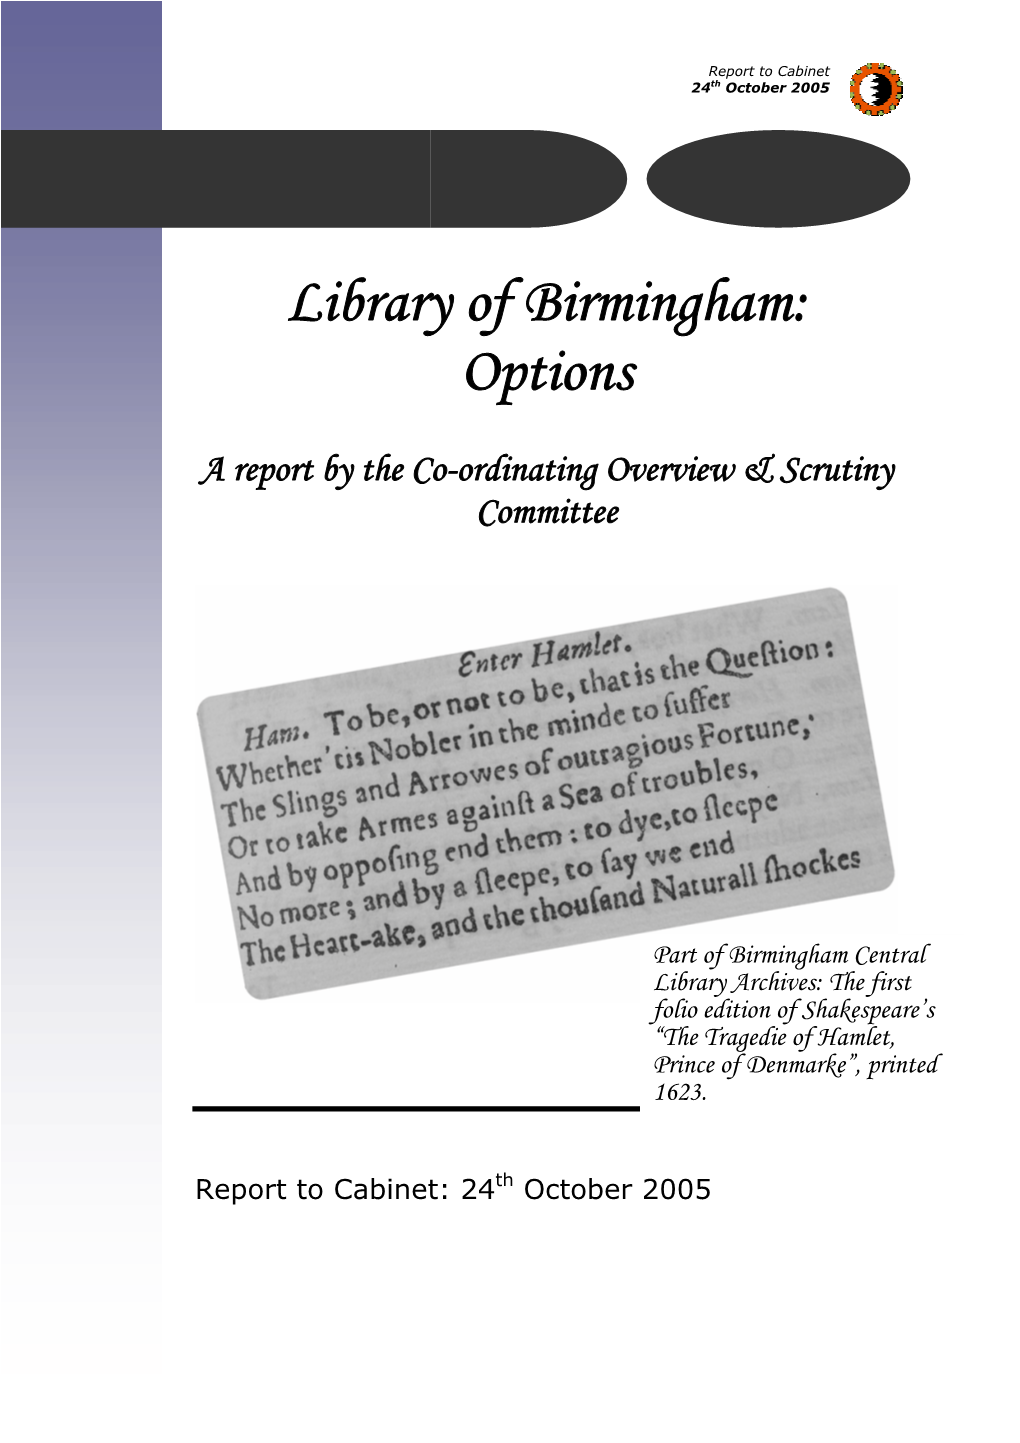 Download: Library of Birmingham Options October 2005